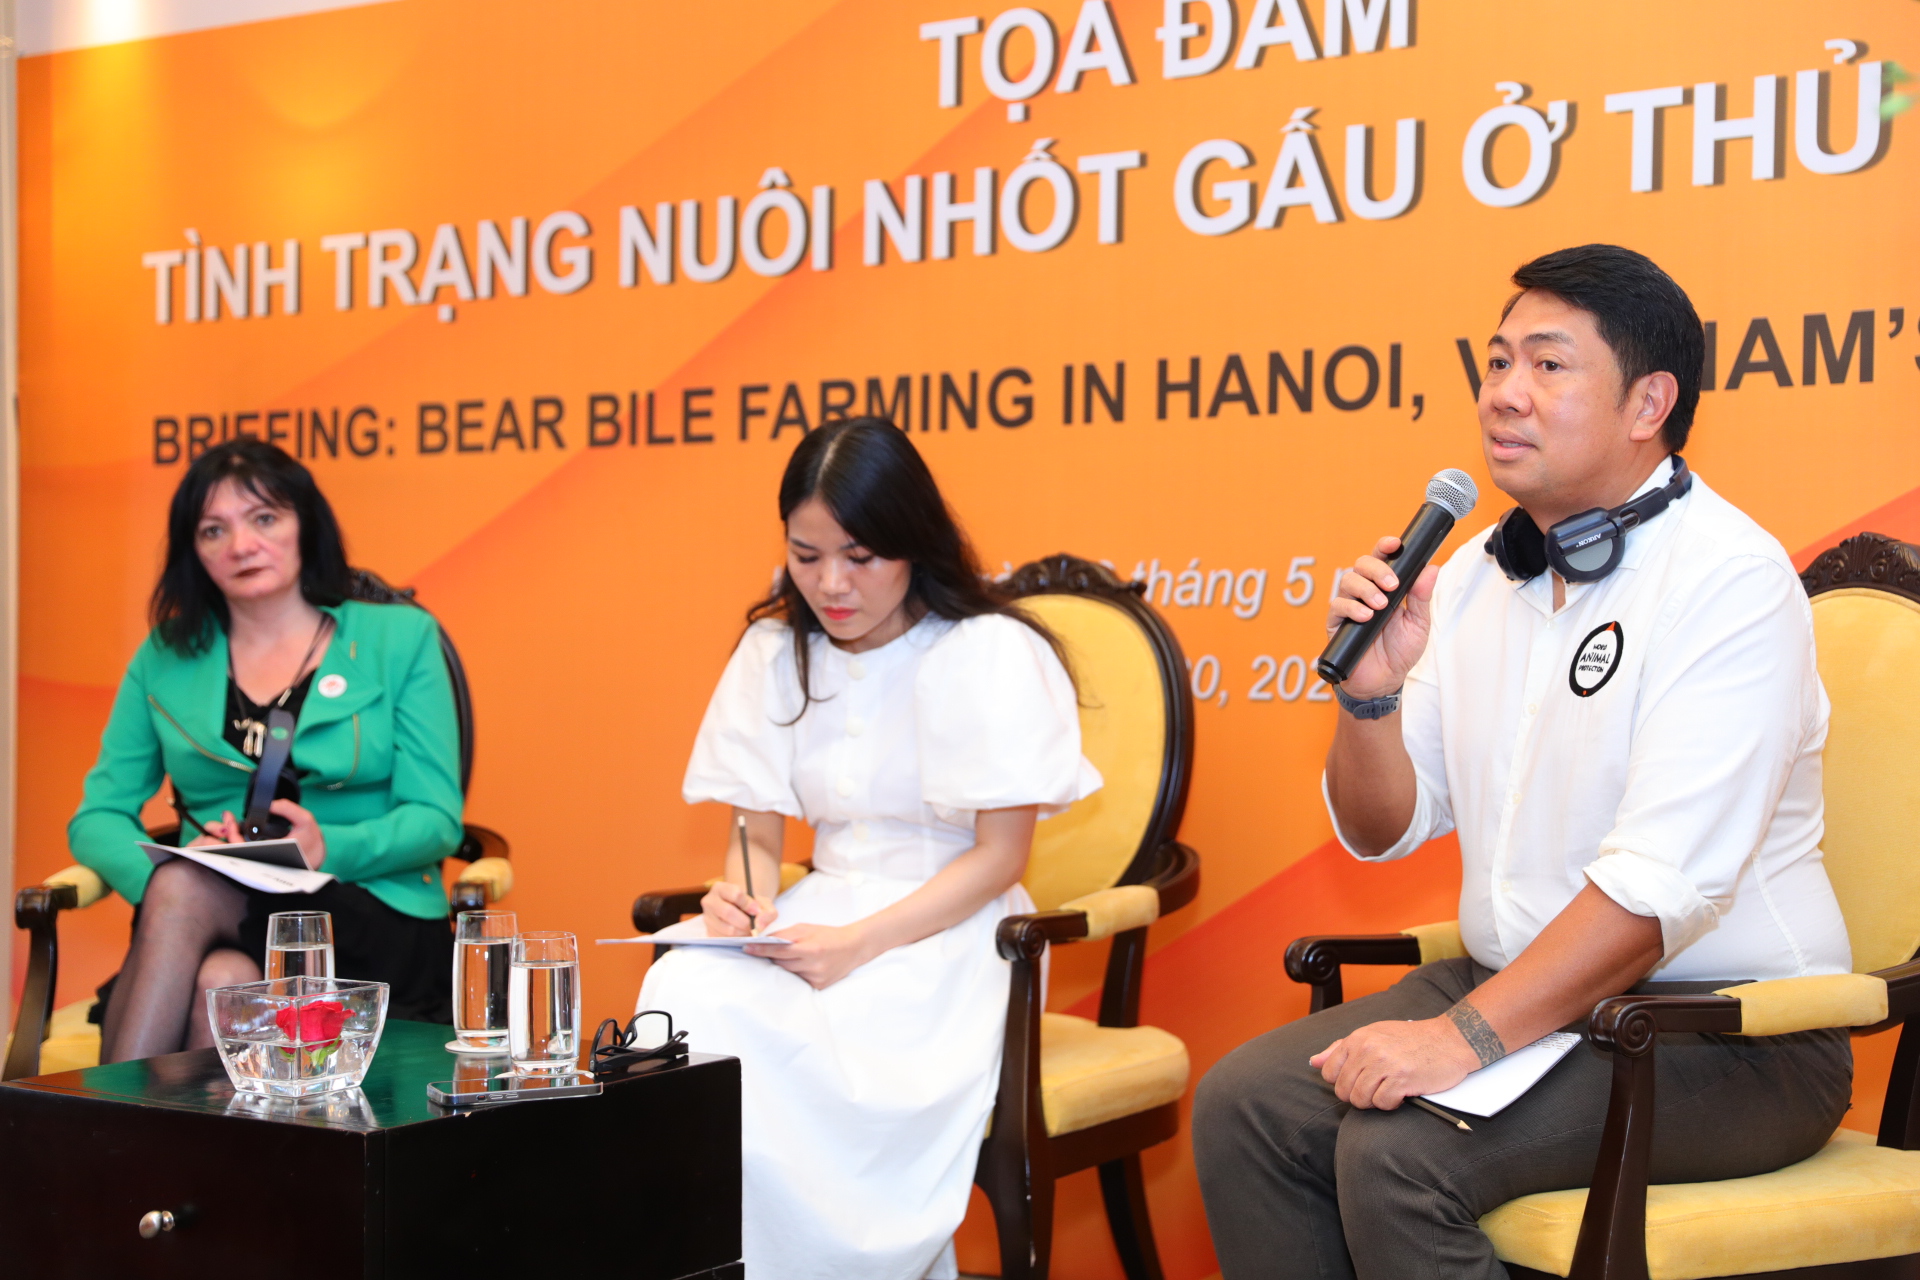 Hanoi home to most bile bears in Vietnam: seminar